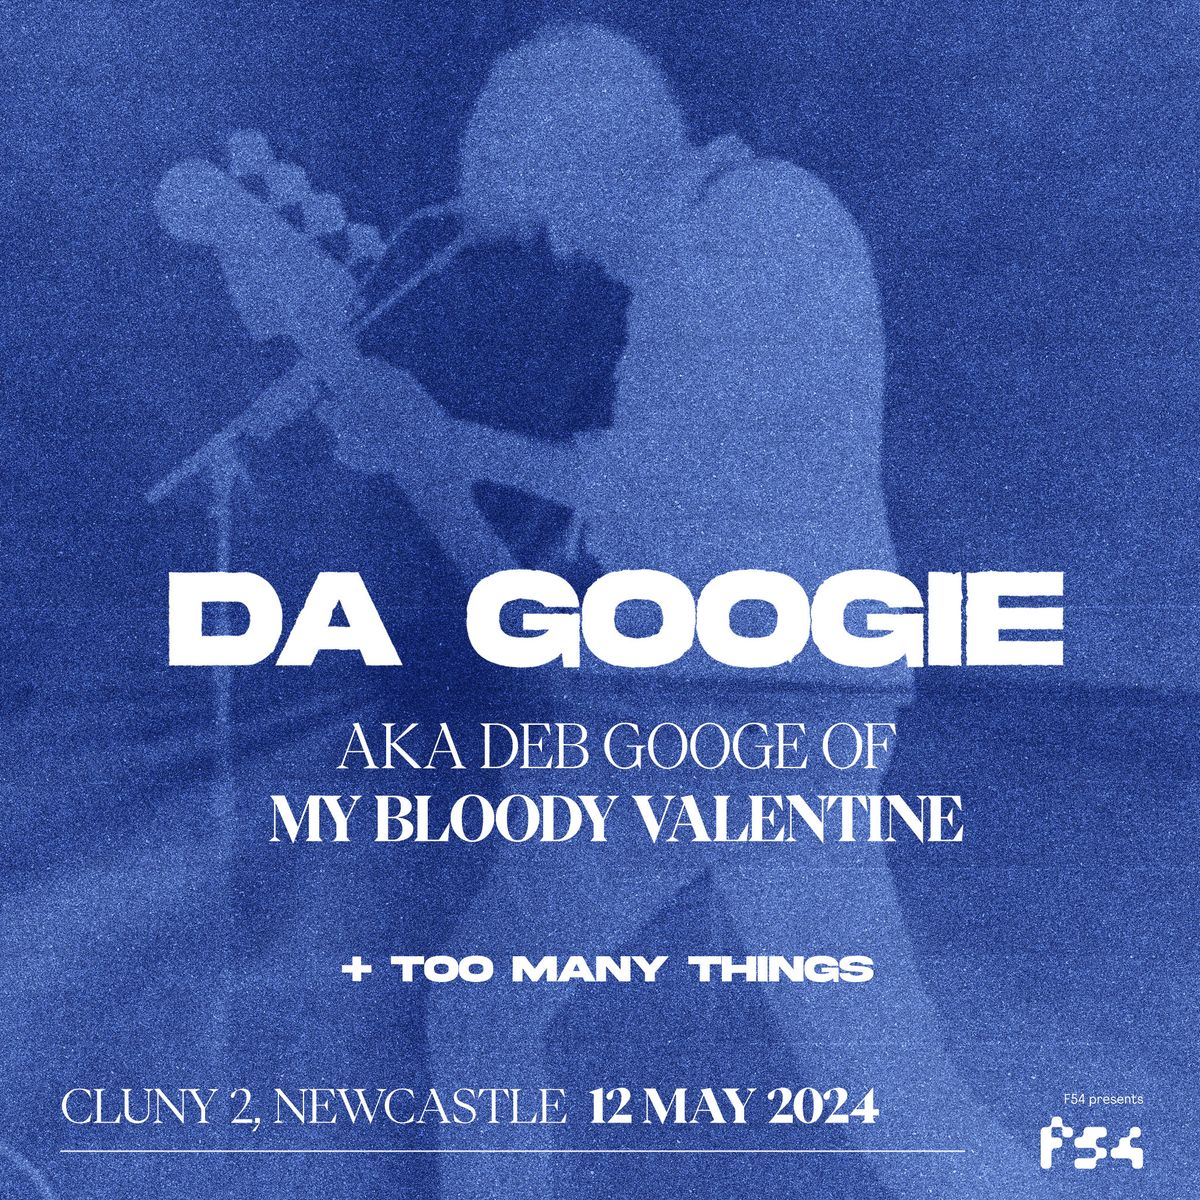 DA GOOGIE aka DEB GOOGE (My Bloody Valentine) + Too Many Things + Trunk \/\/ Cluny 2, Newcastle